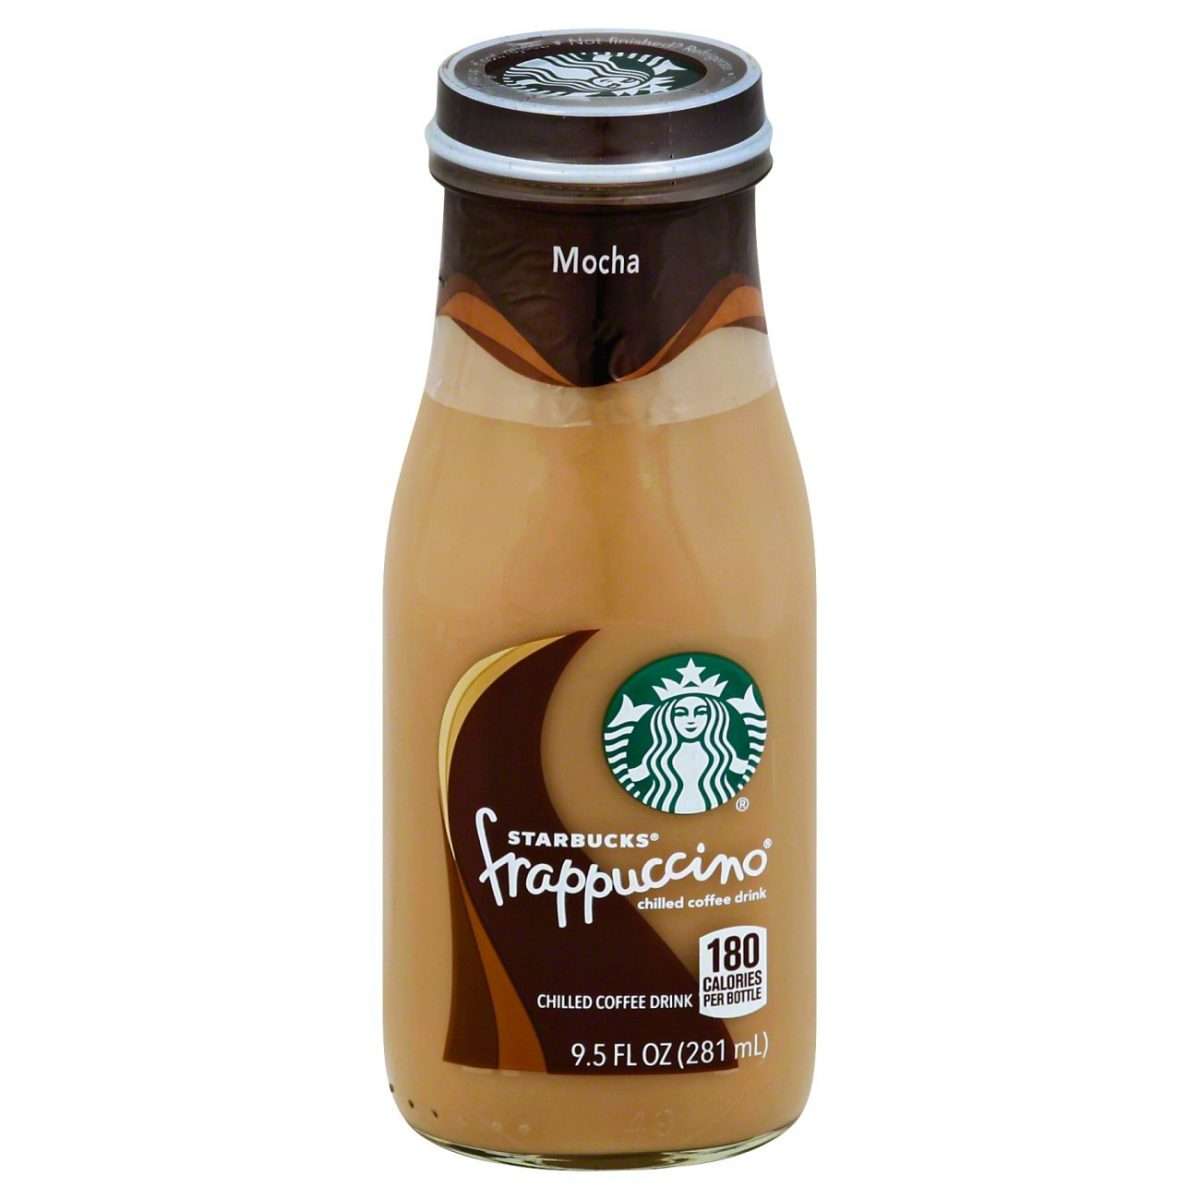 Starbucks Mocha Frappuccino Chilled Coffee Drink